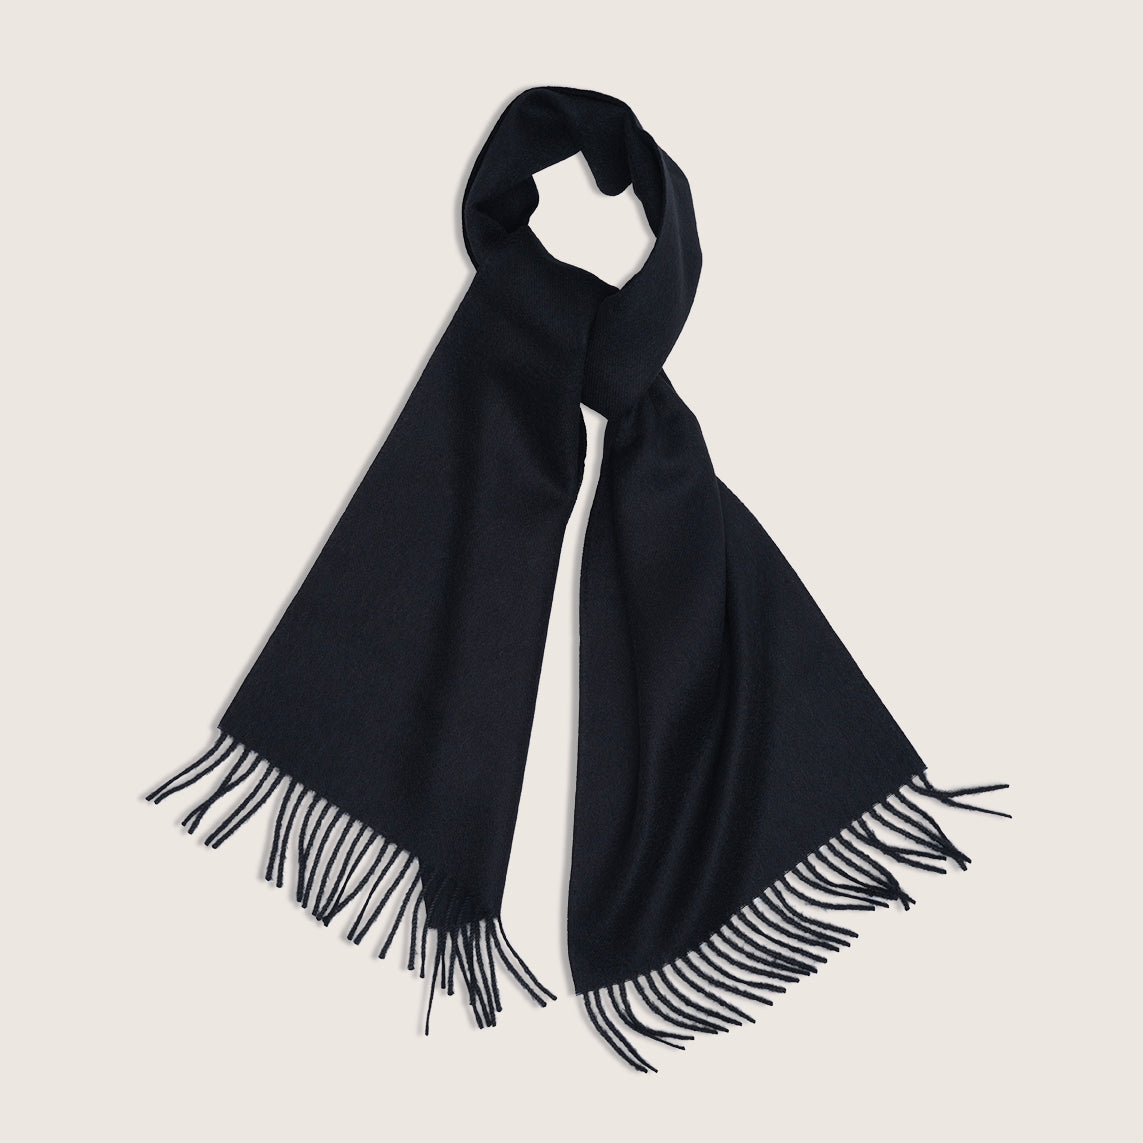 French contemporary artisan brand Timothee Paris baby alpaca minimal scarf knotted black